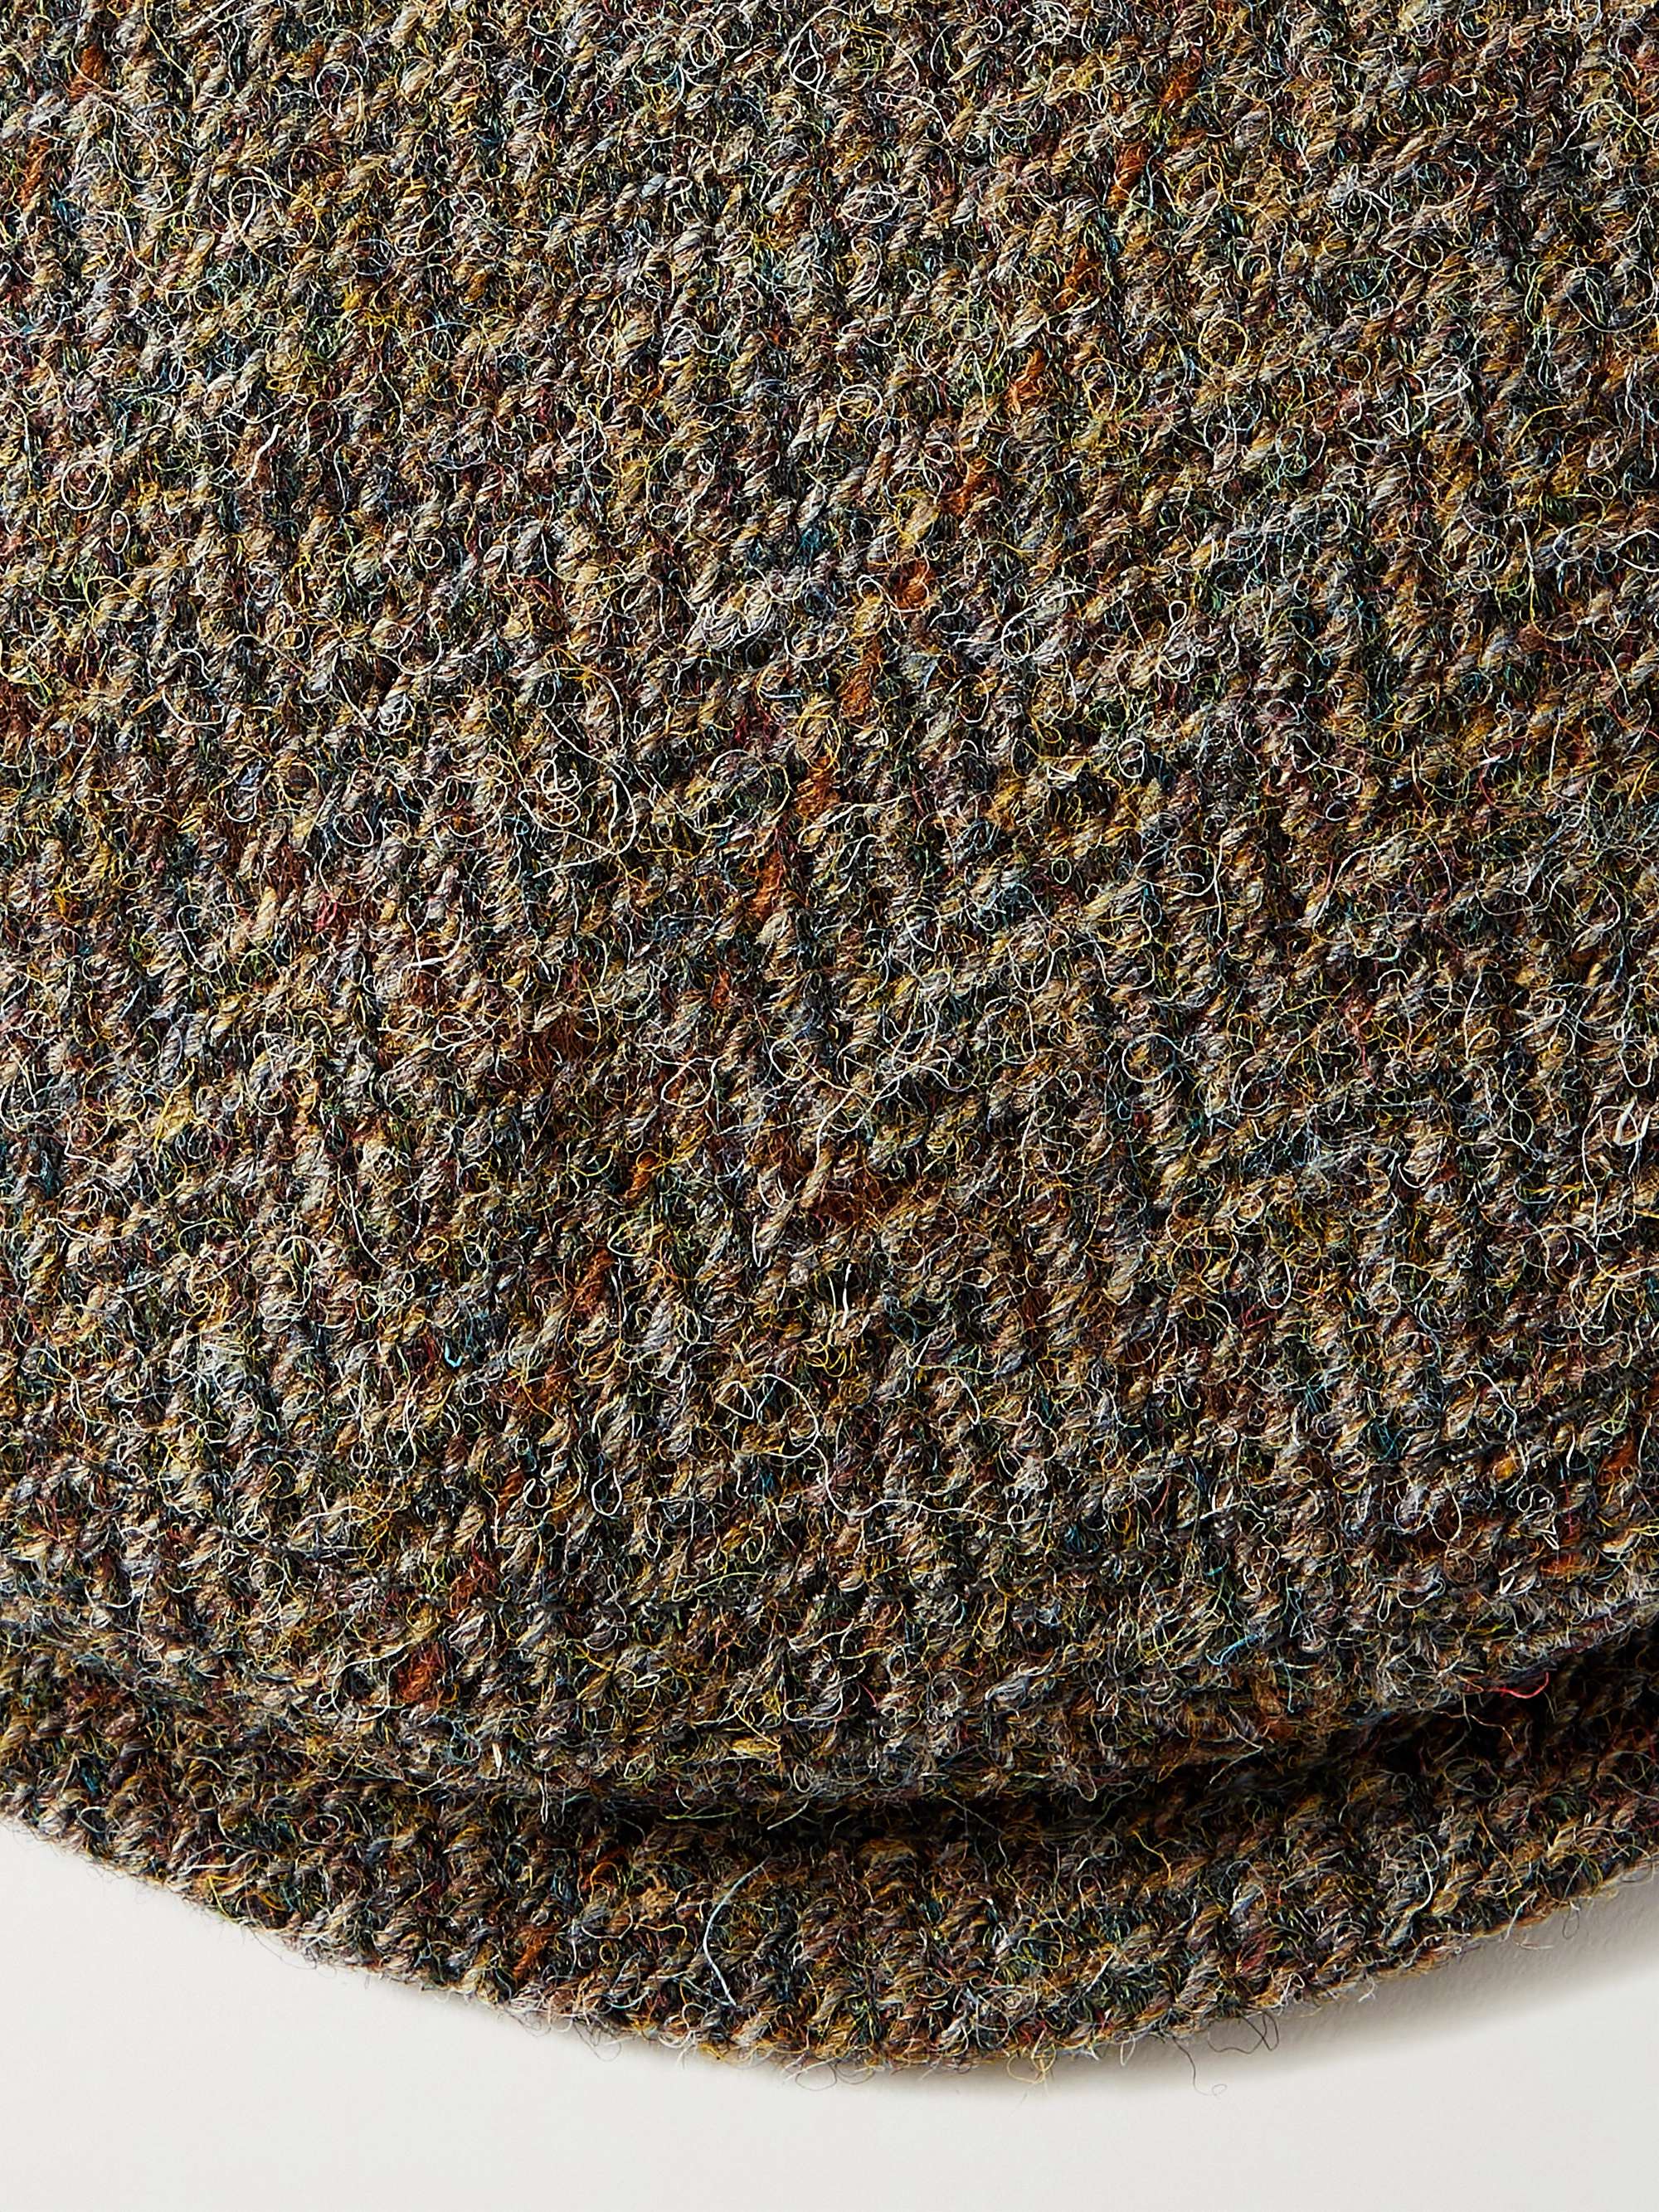 KINGSMAN + Lock & Co. Herringbone Cotton-Tweed Flat Cap